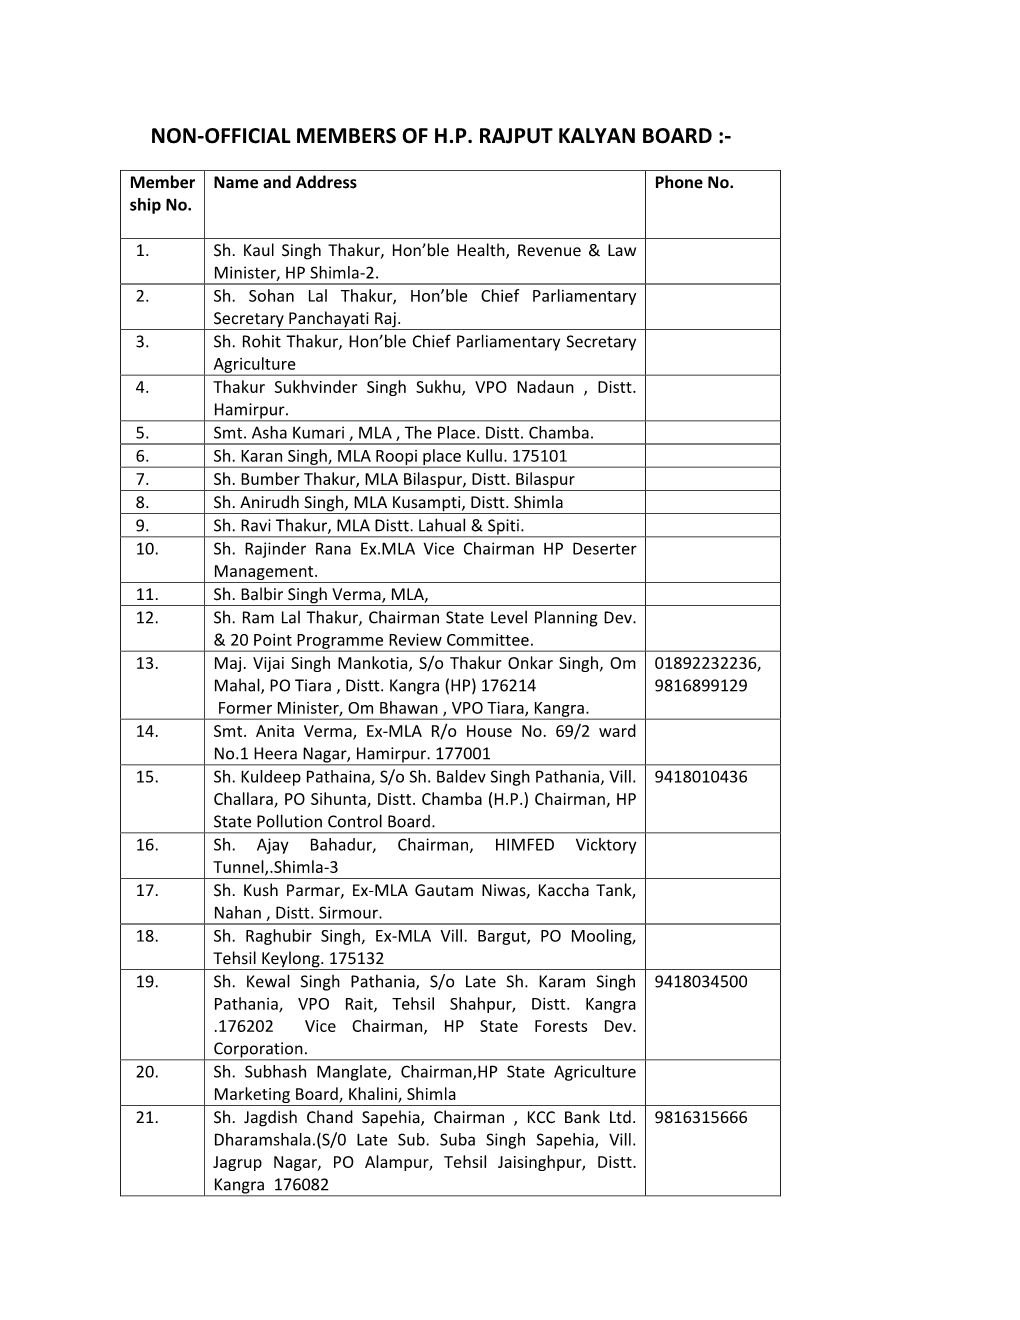 Non-Official Members of H.P. Rajput Kalyan Board